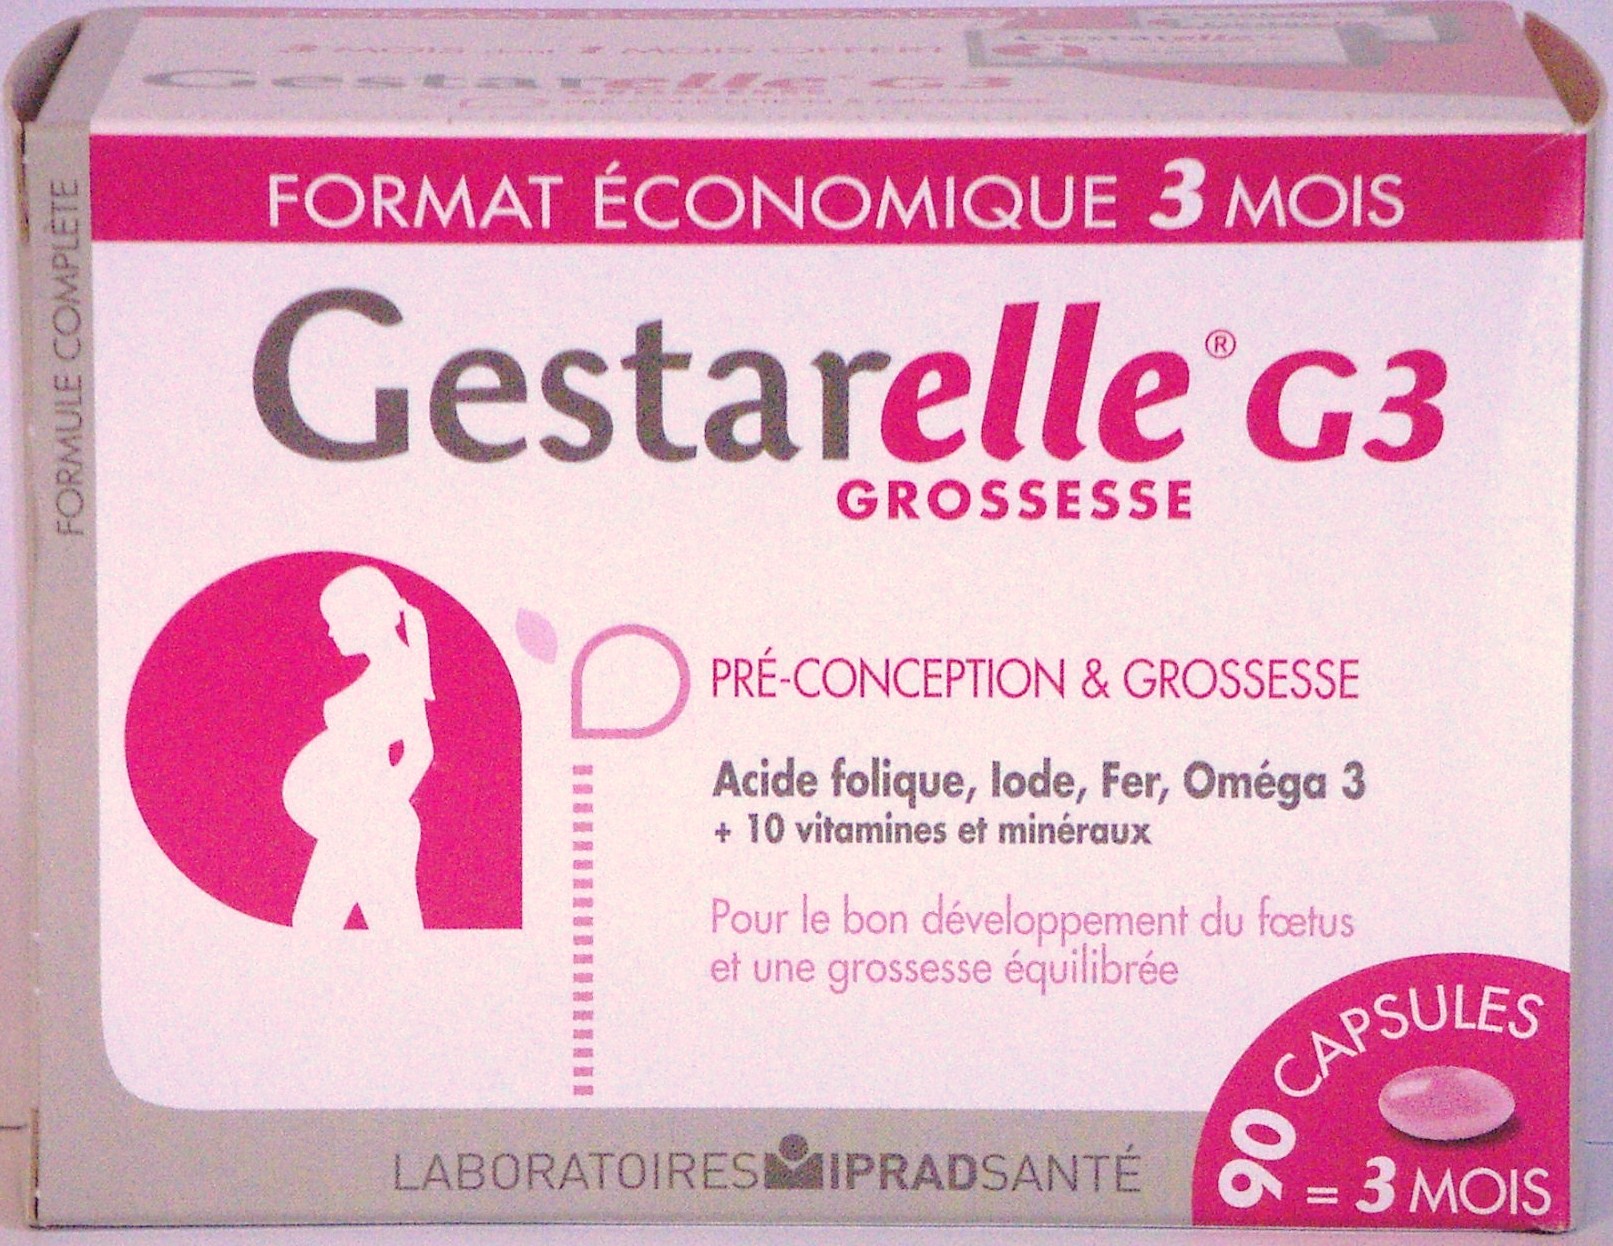 Gestarelle G+ Grossesse en capsules - Vitamines Maternité